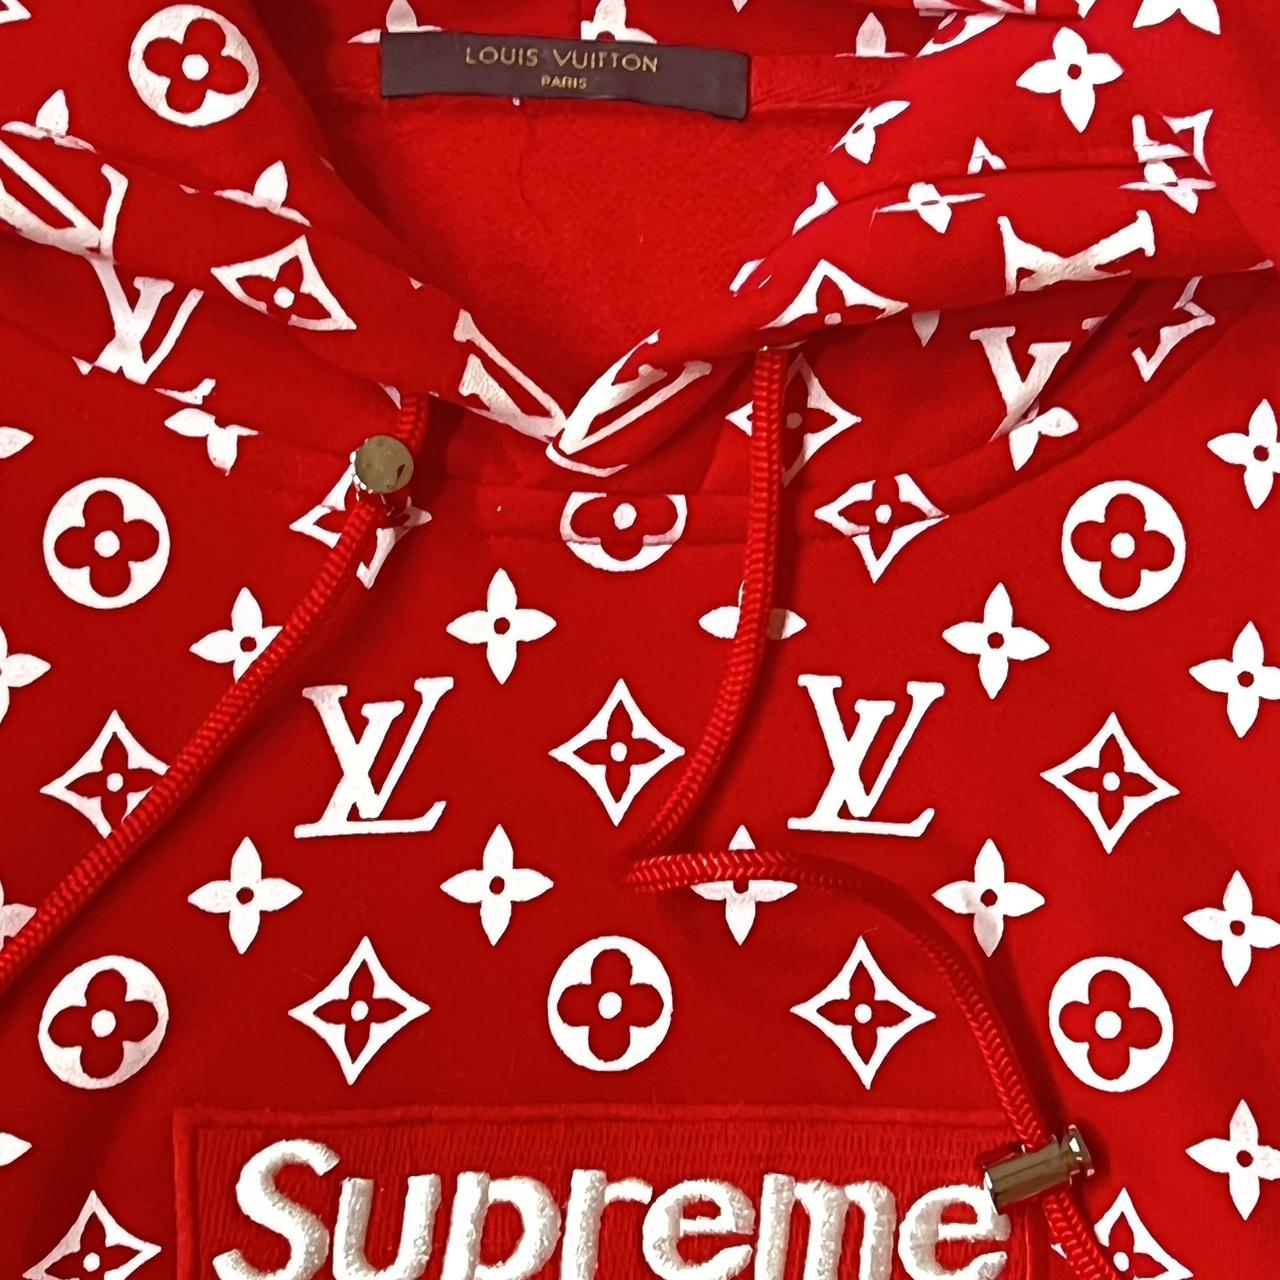 Supreme x Louis Vuitton Wallet - Depop